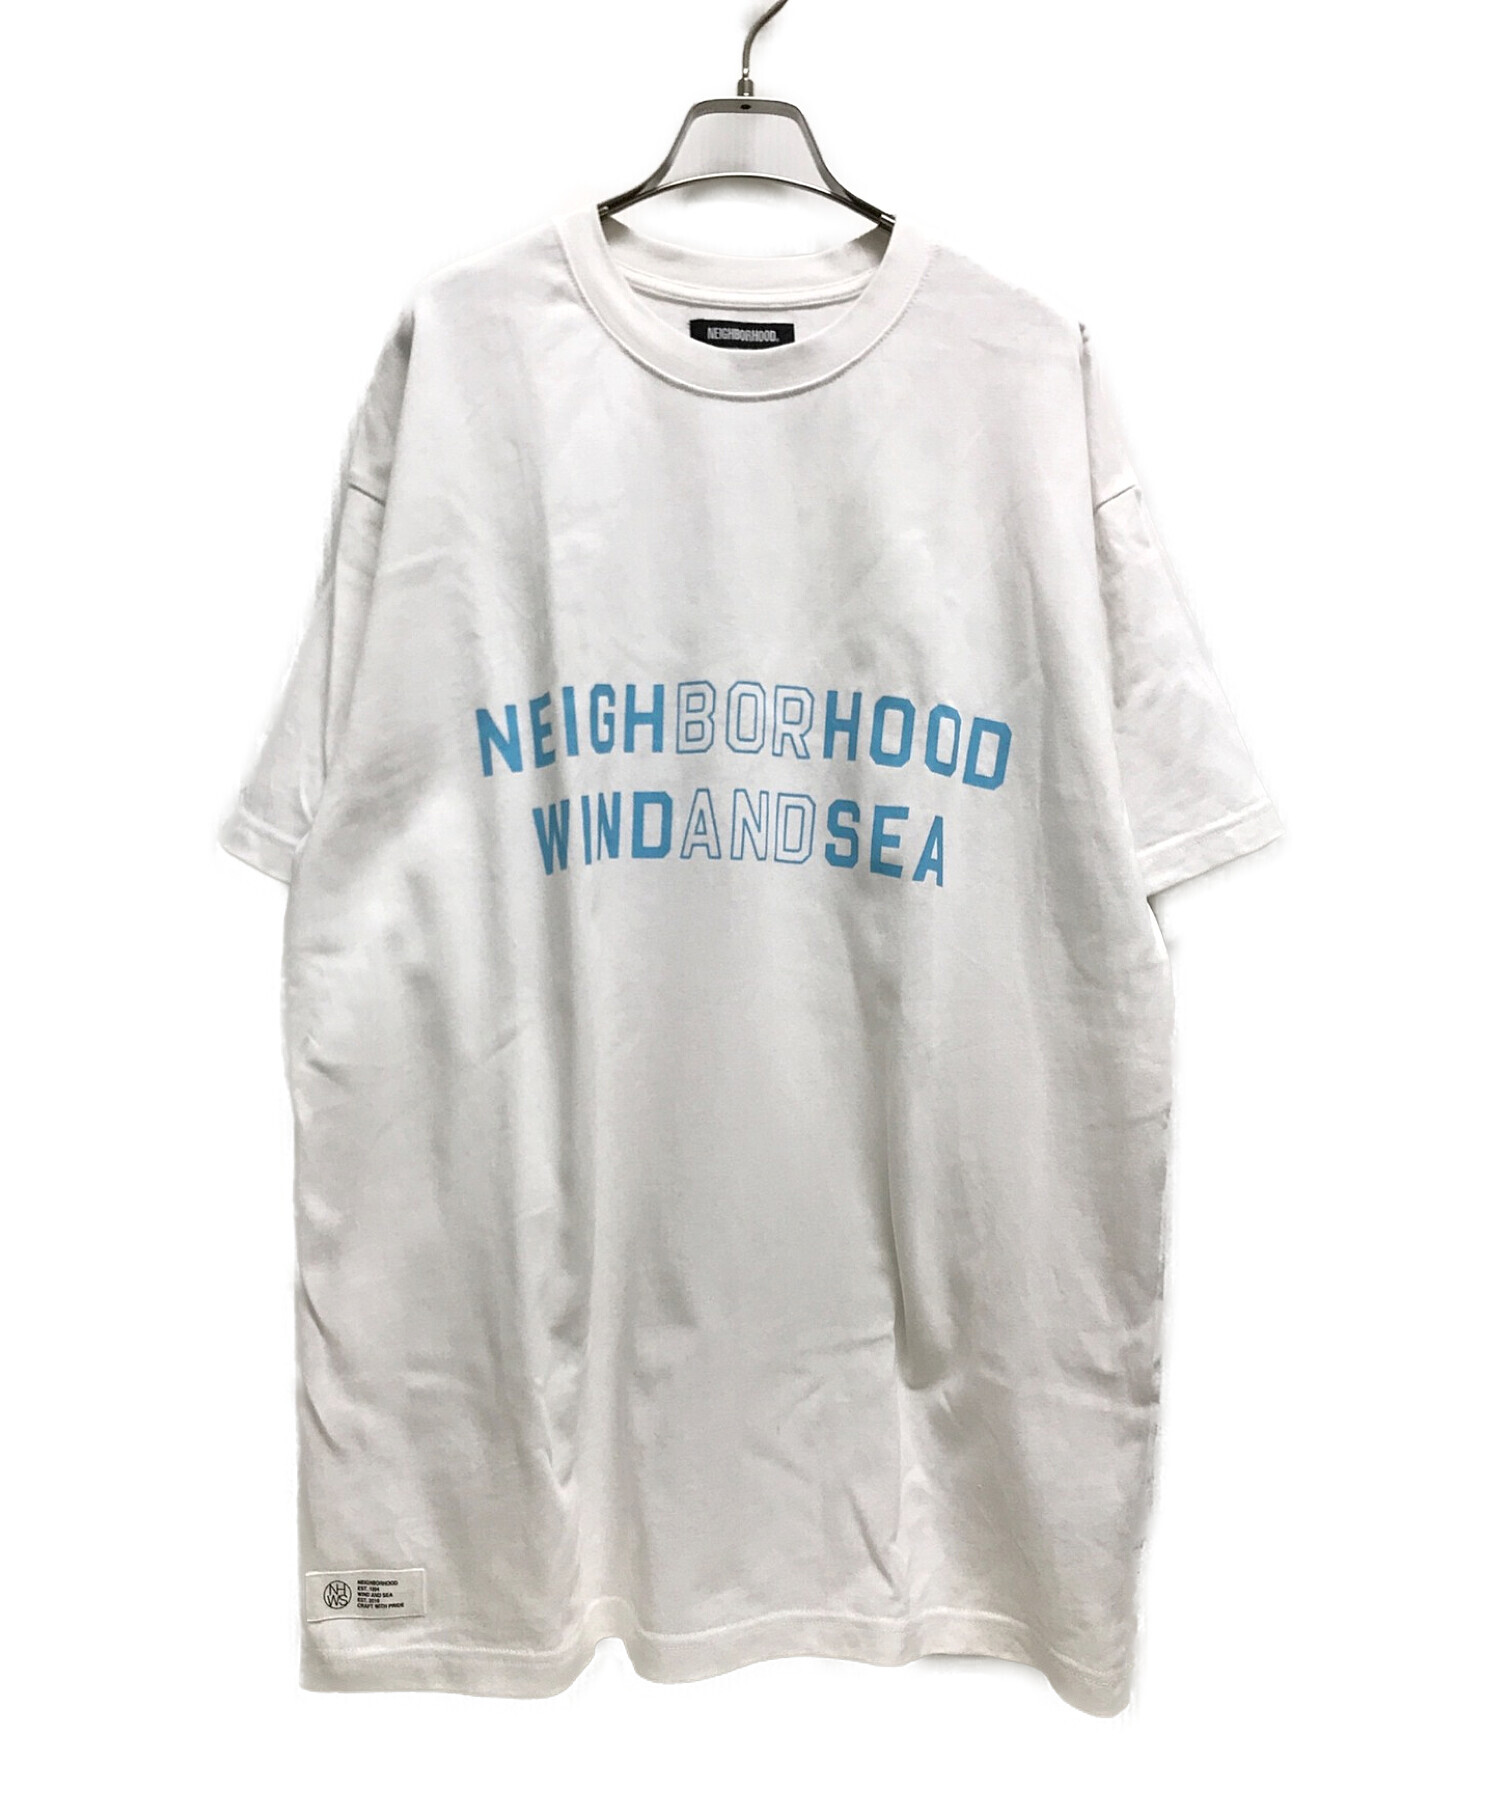 NEIGHBORHOOD WIND AND SEA Tシャツ XL - sorbillomenu.com